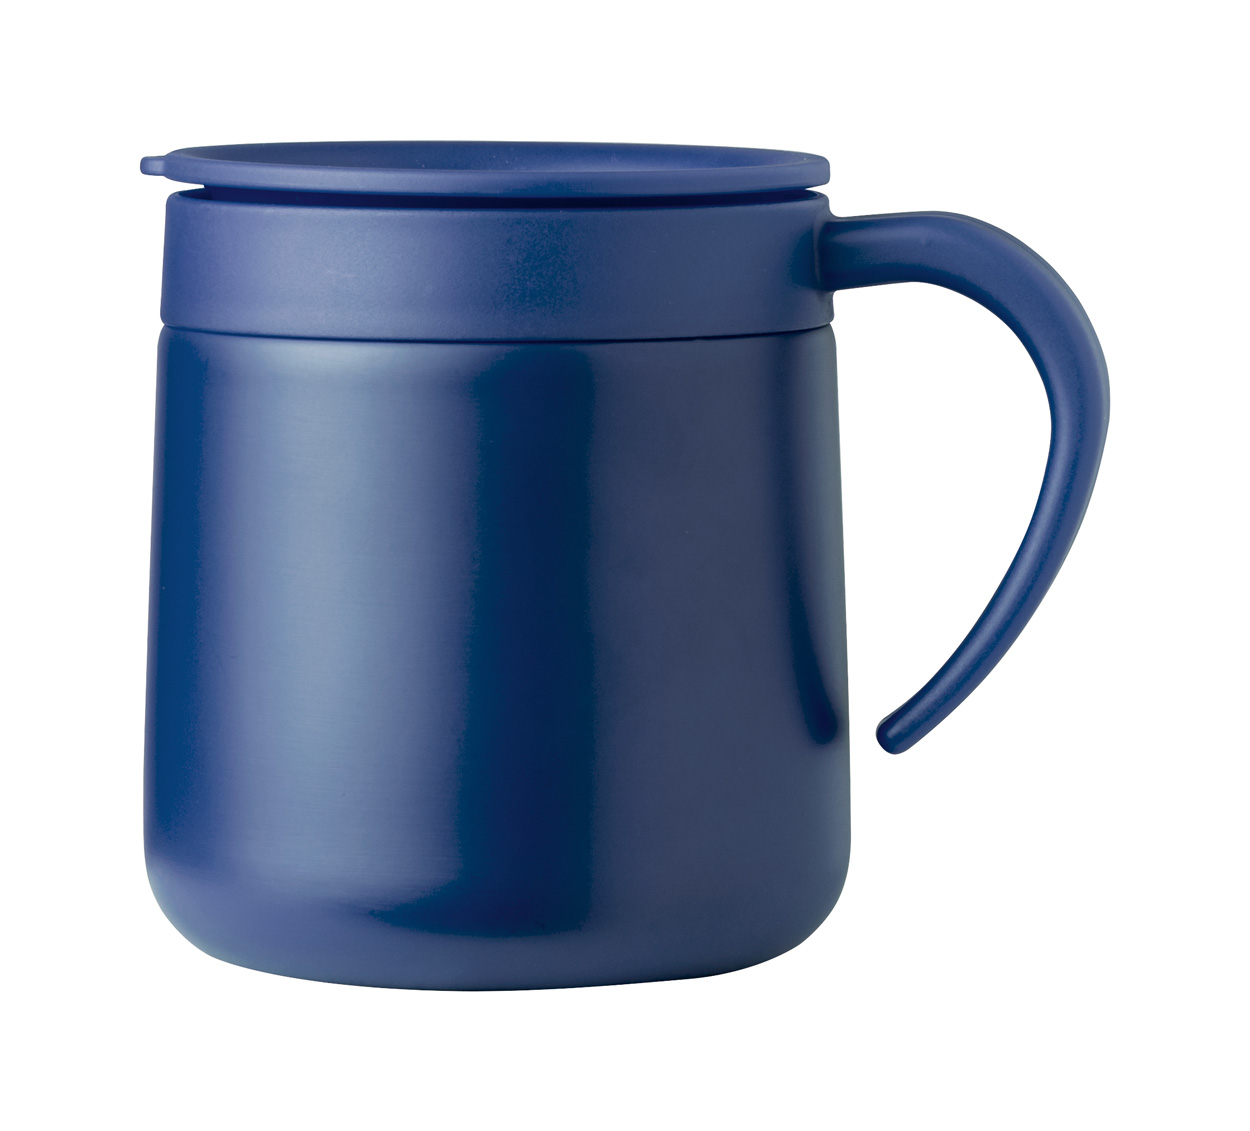 Bokat thermo mug - blue